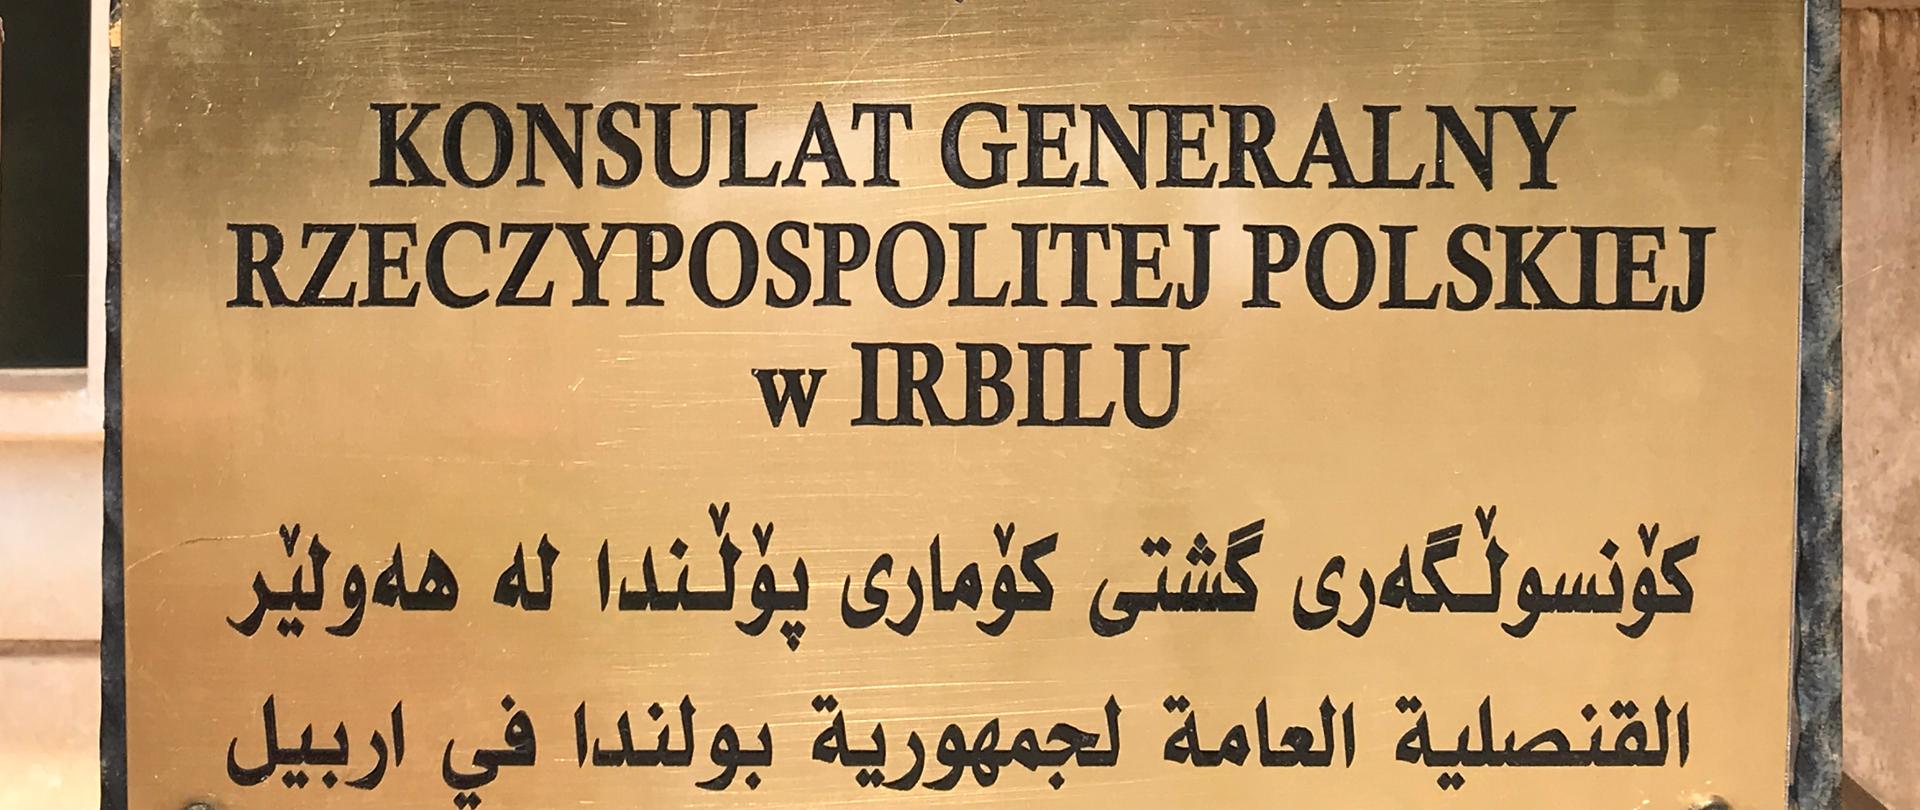 KG_RP_Irbil_tablica